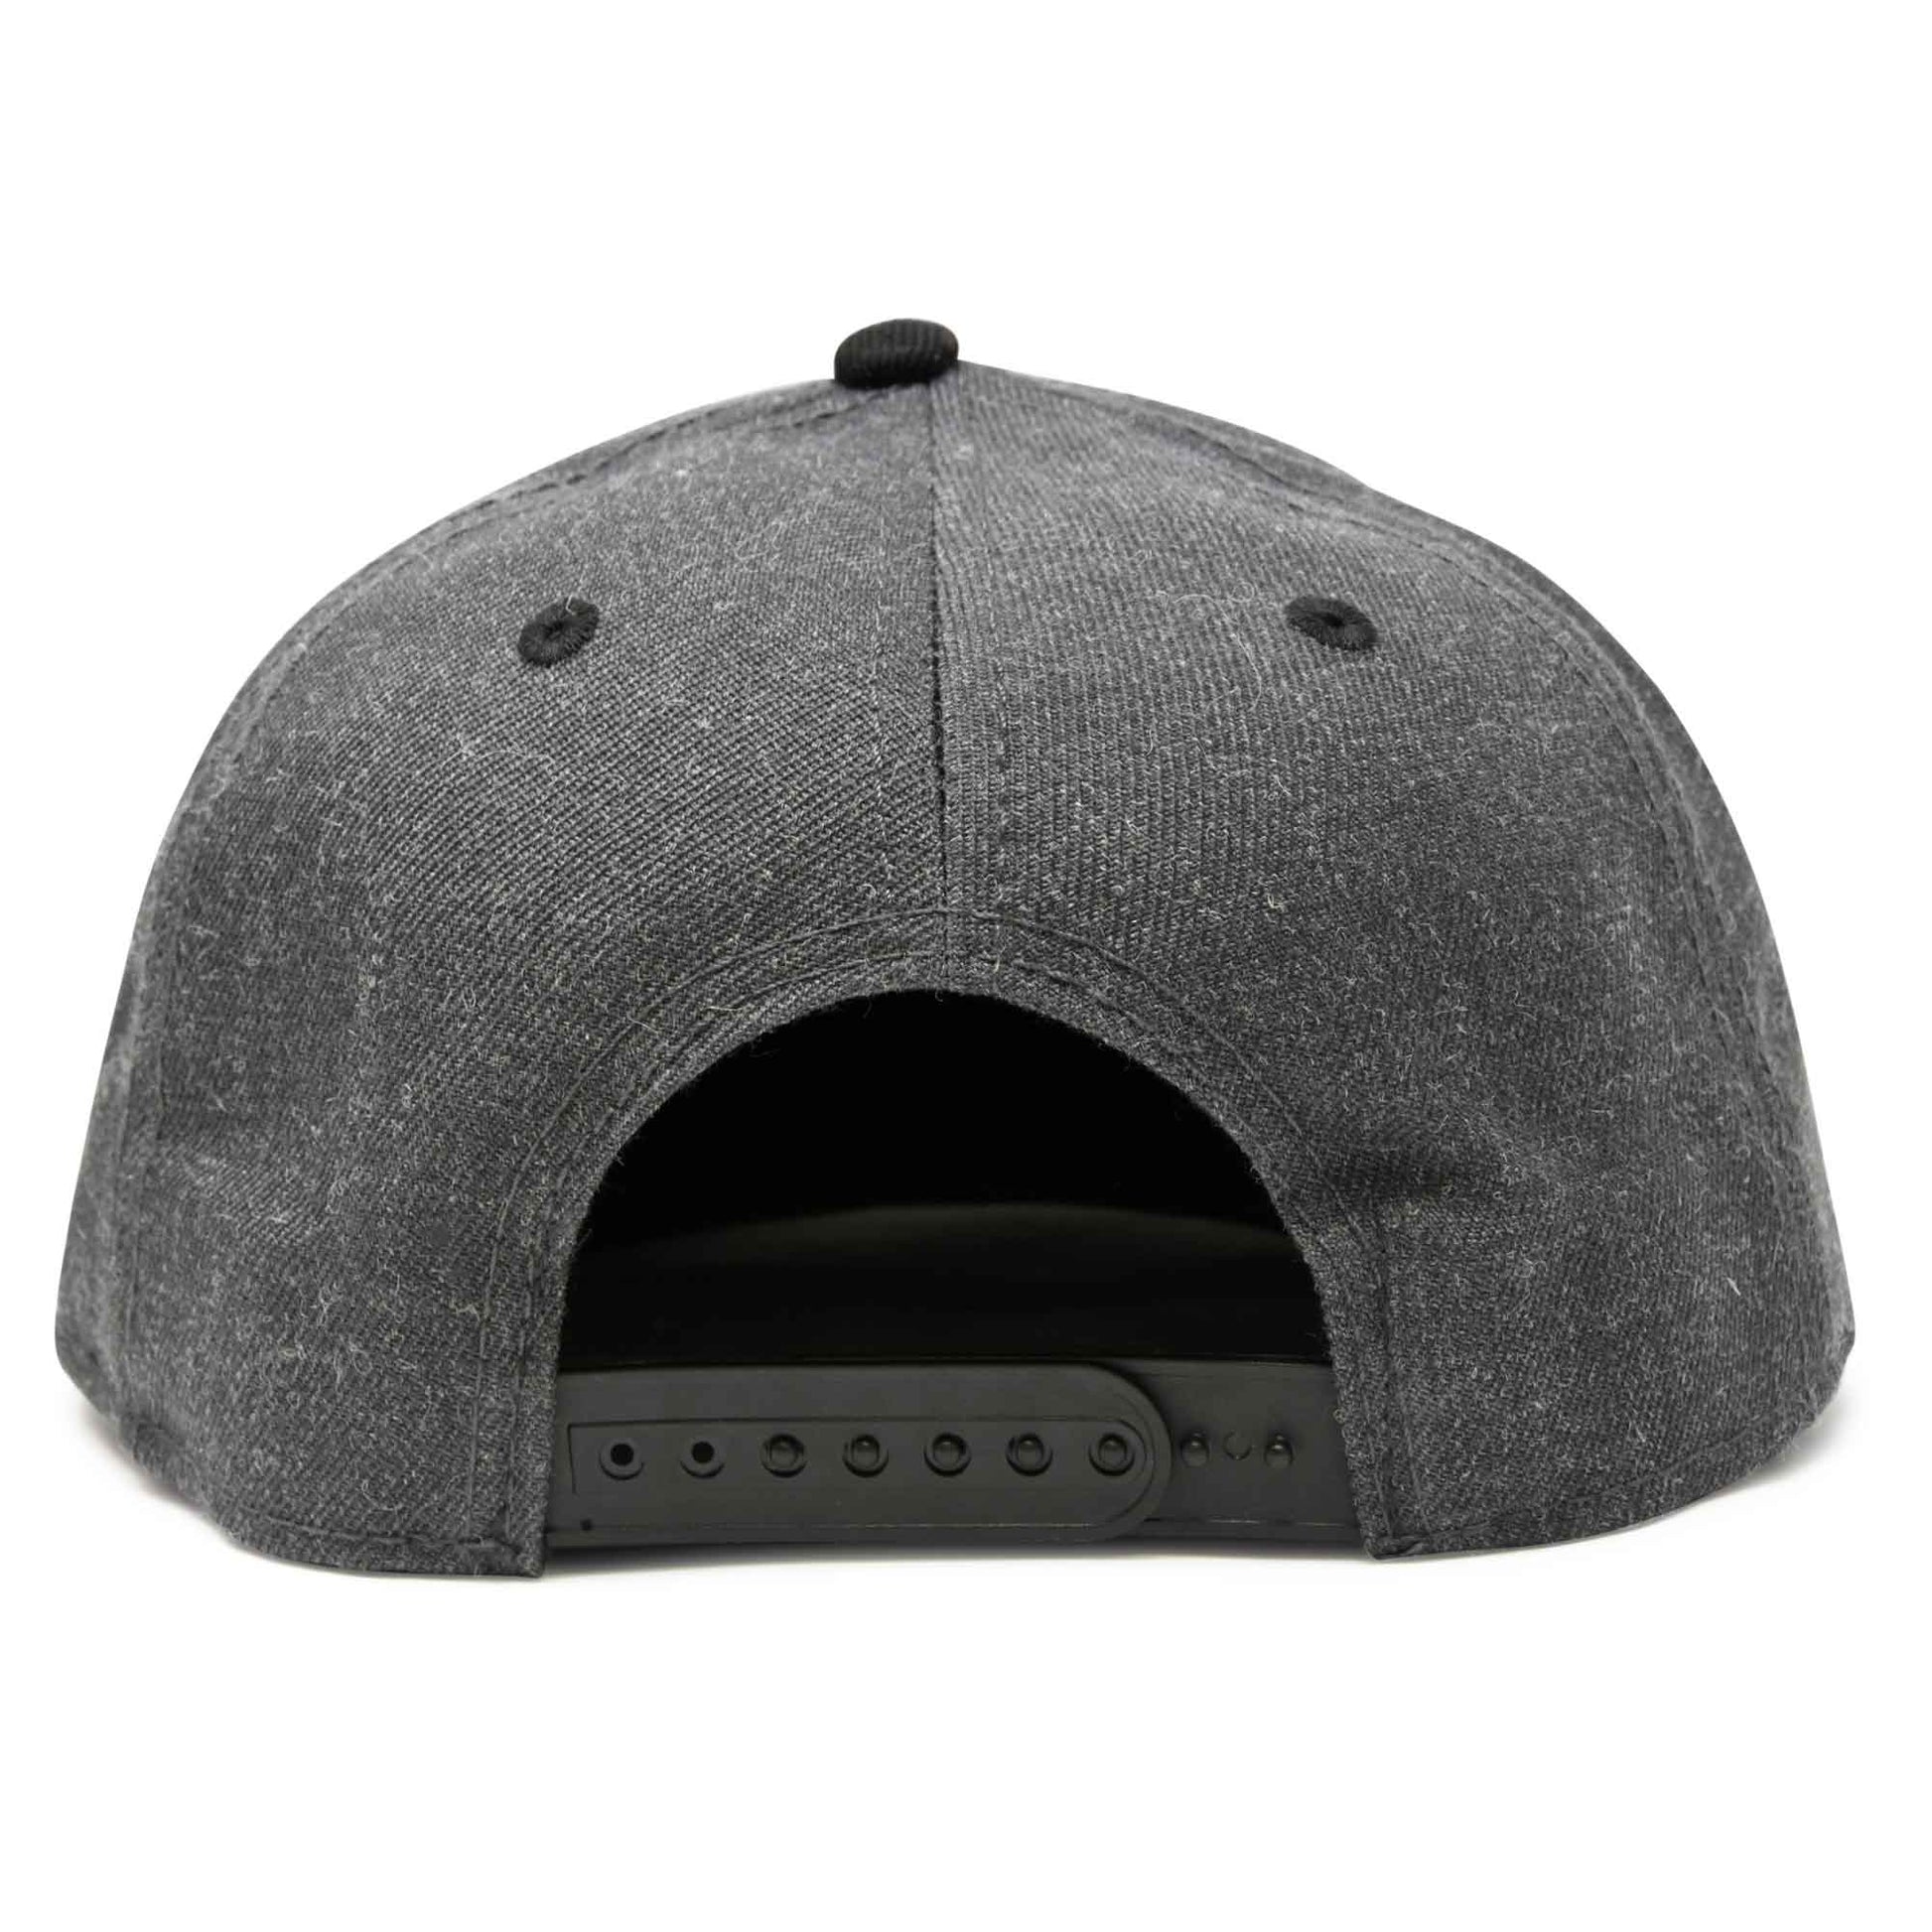 Dalix Rainbow Snapback Flat Bill Baseball Hat Embroidered Cap Mens in Black Light Gray